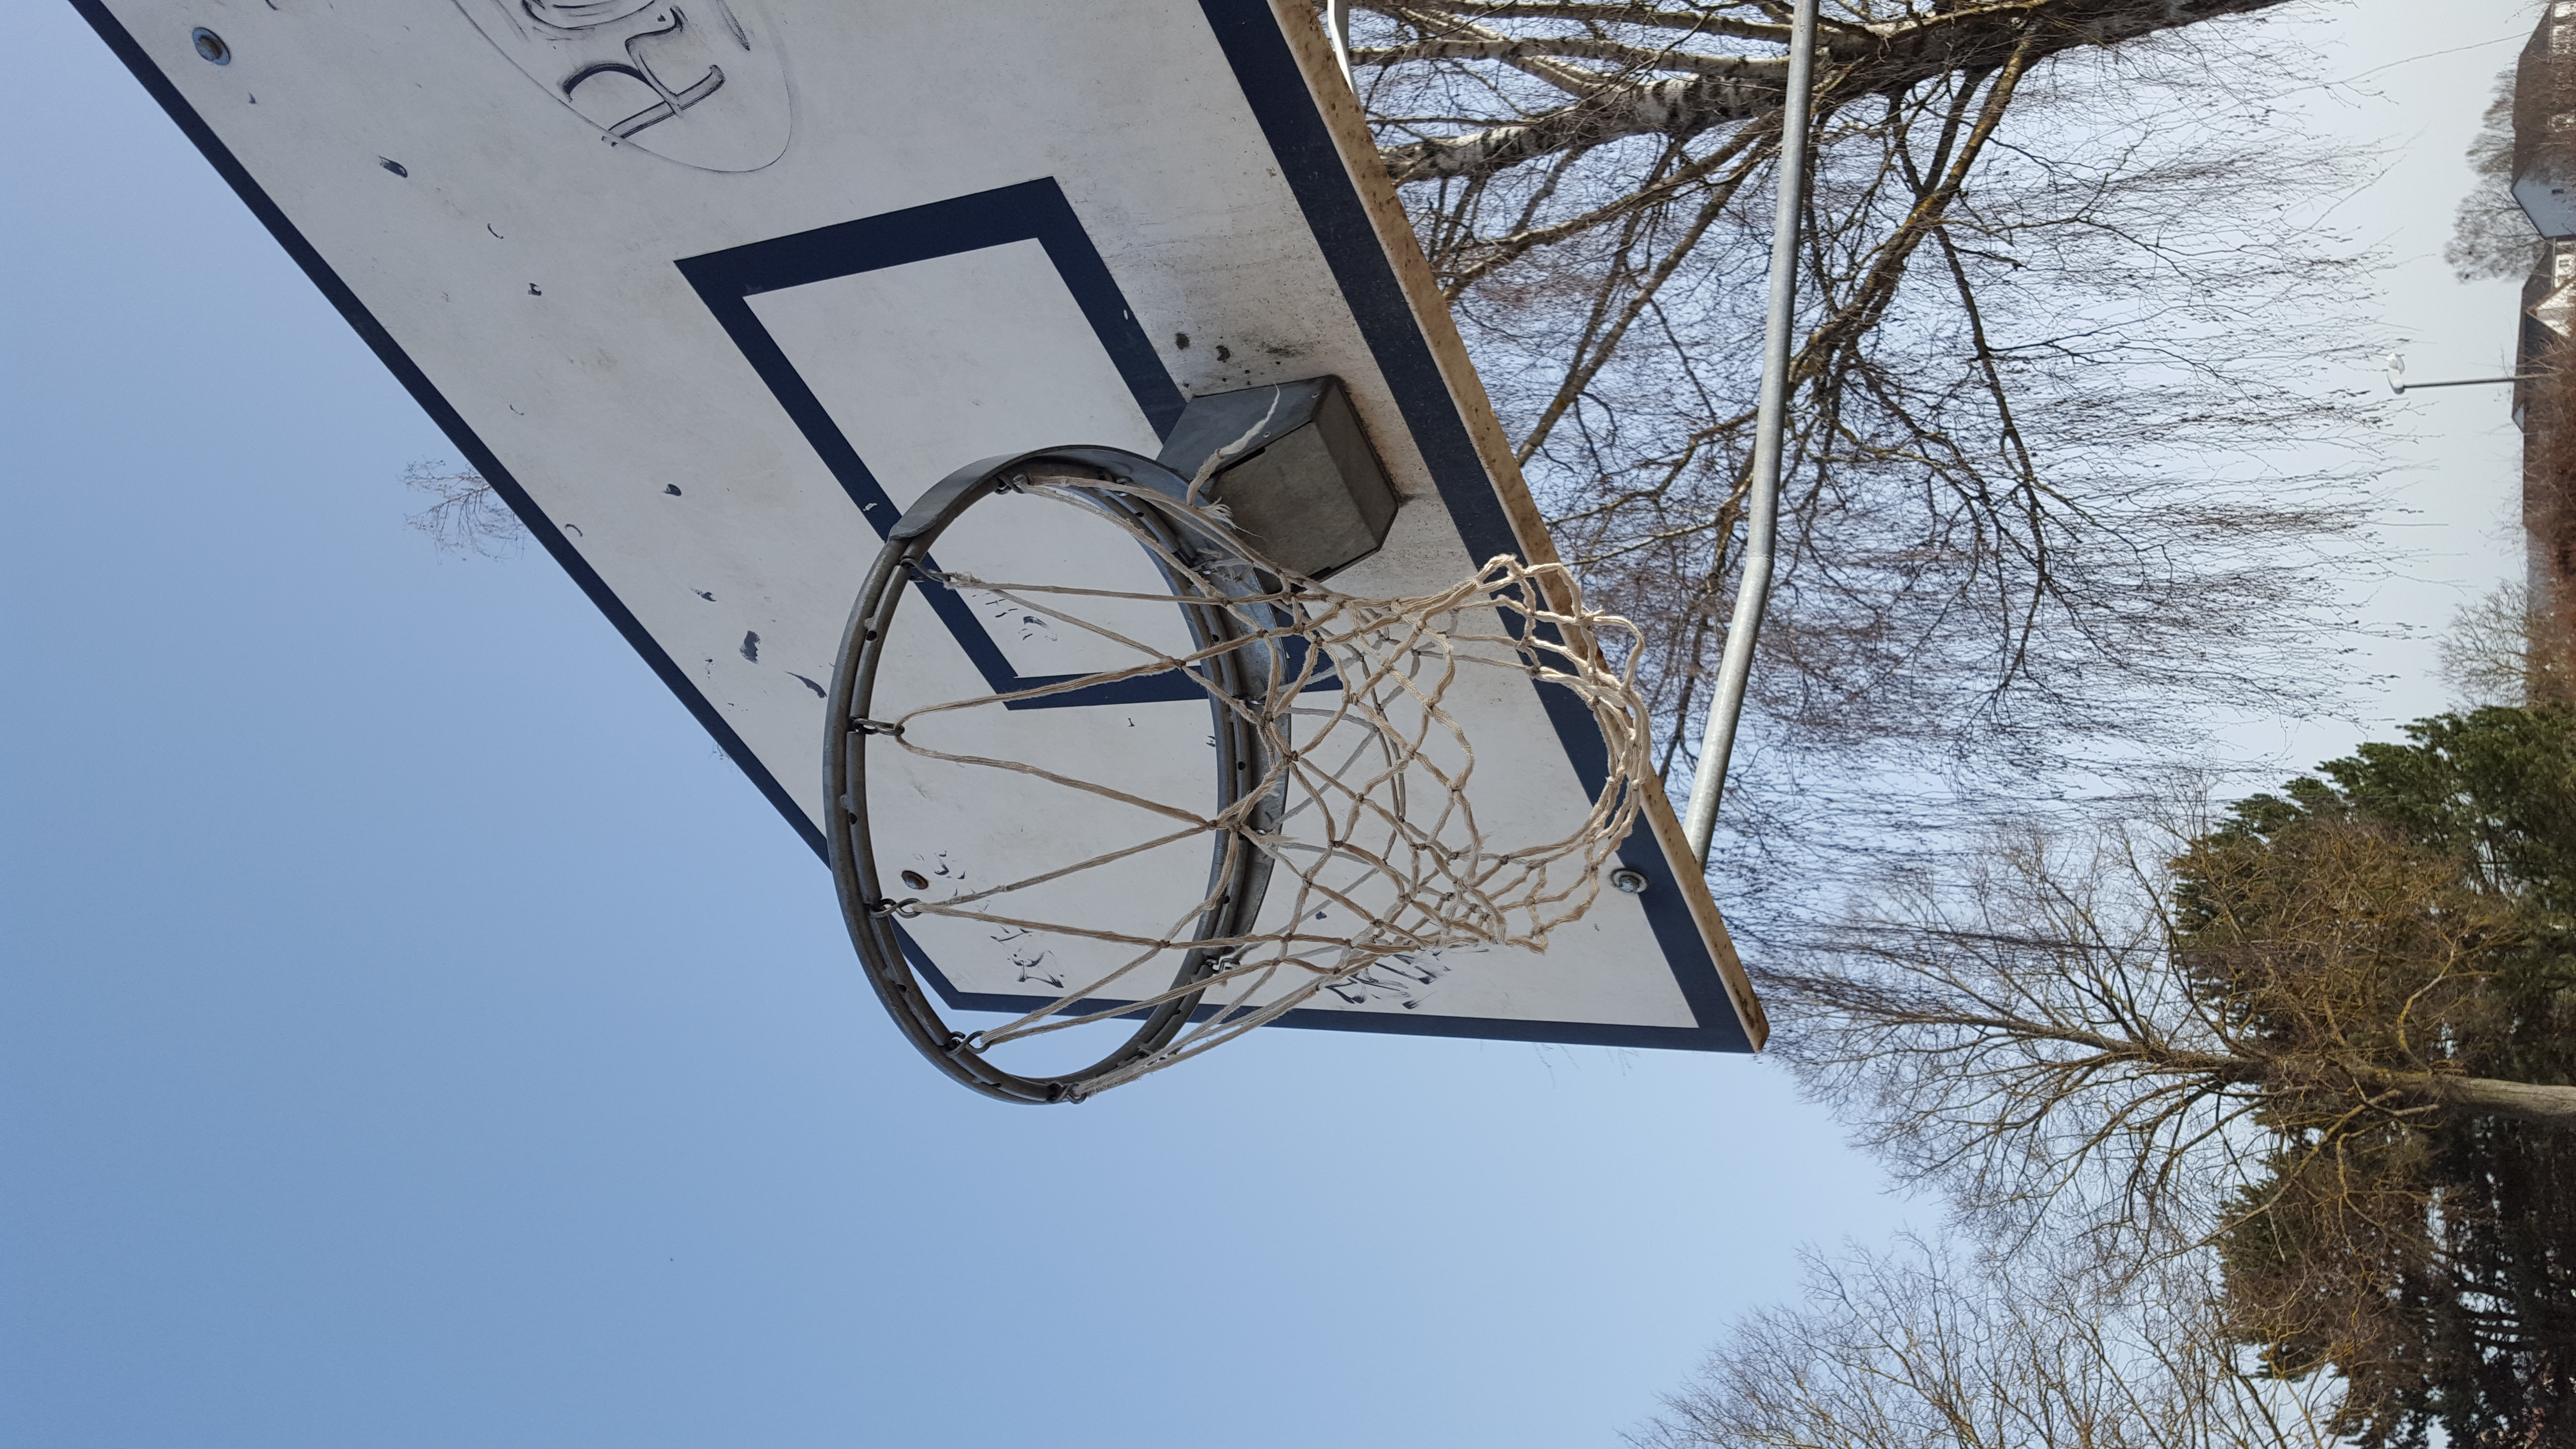 Streetballplatz Basketballkorb